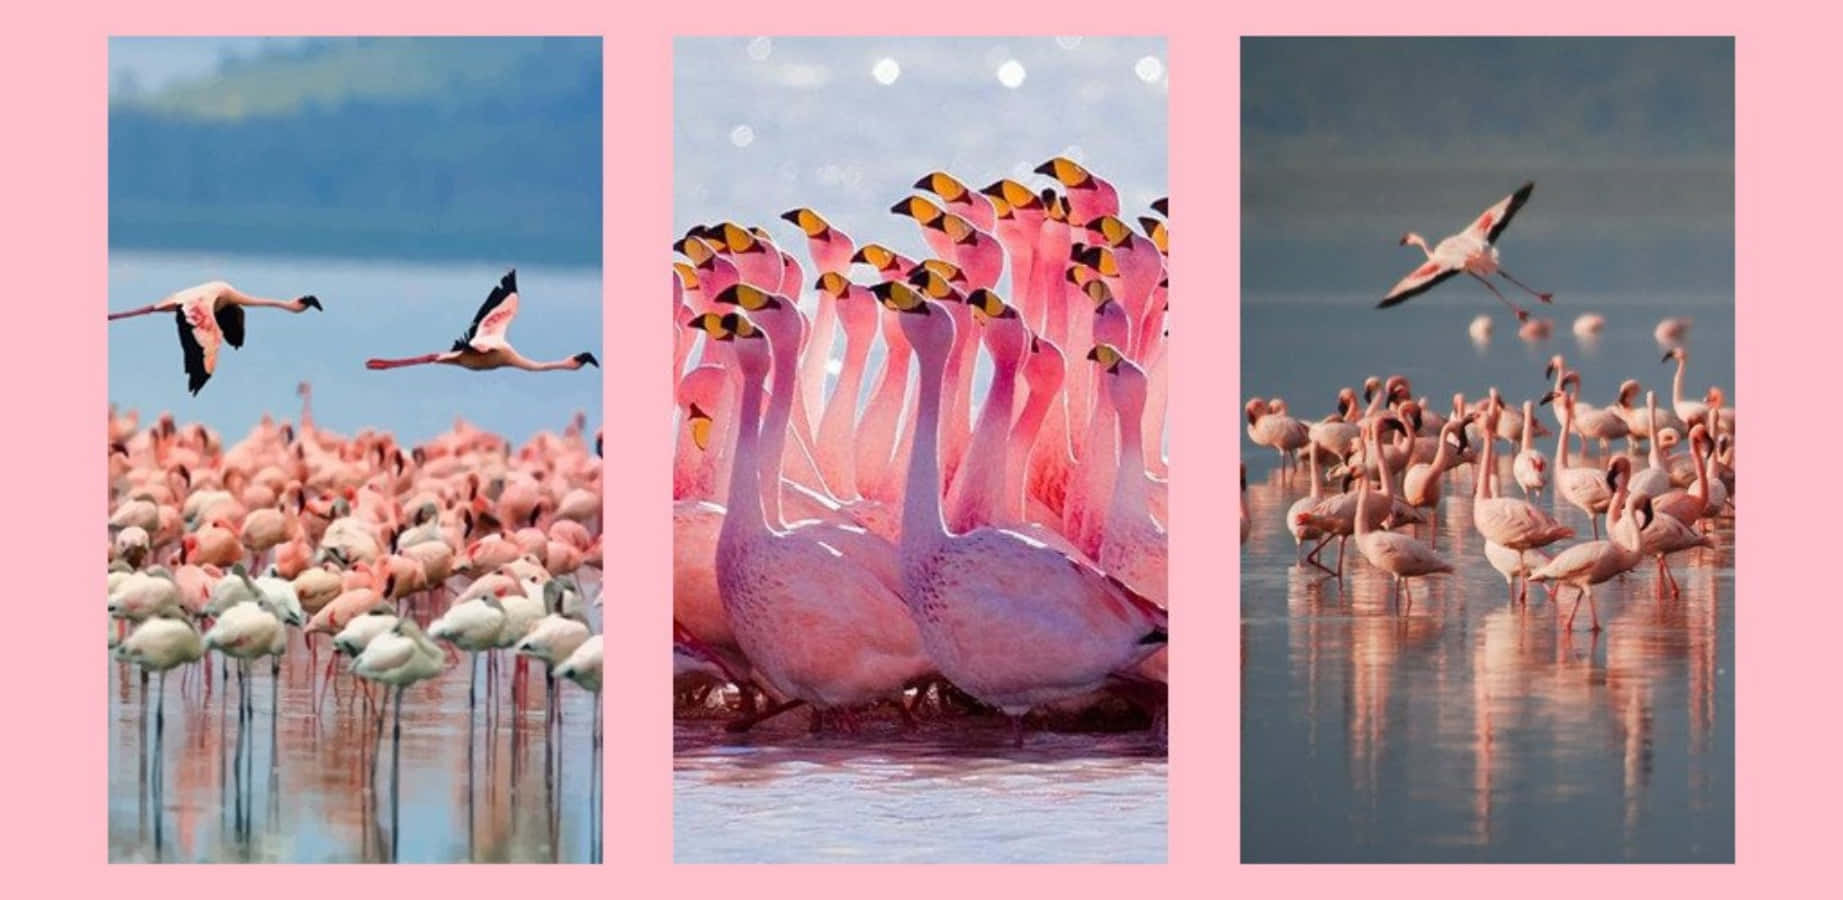 A Flock of Pink Flamingos GracefullyStanding in the Water Wallpaper